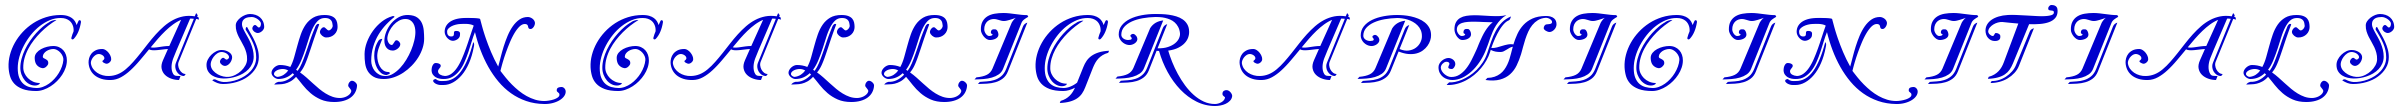 Caslon Calligraphic Initials шрифт